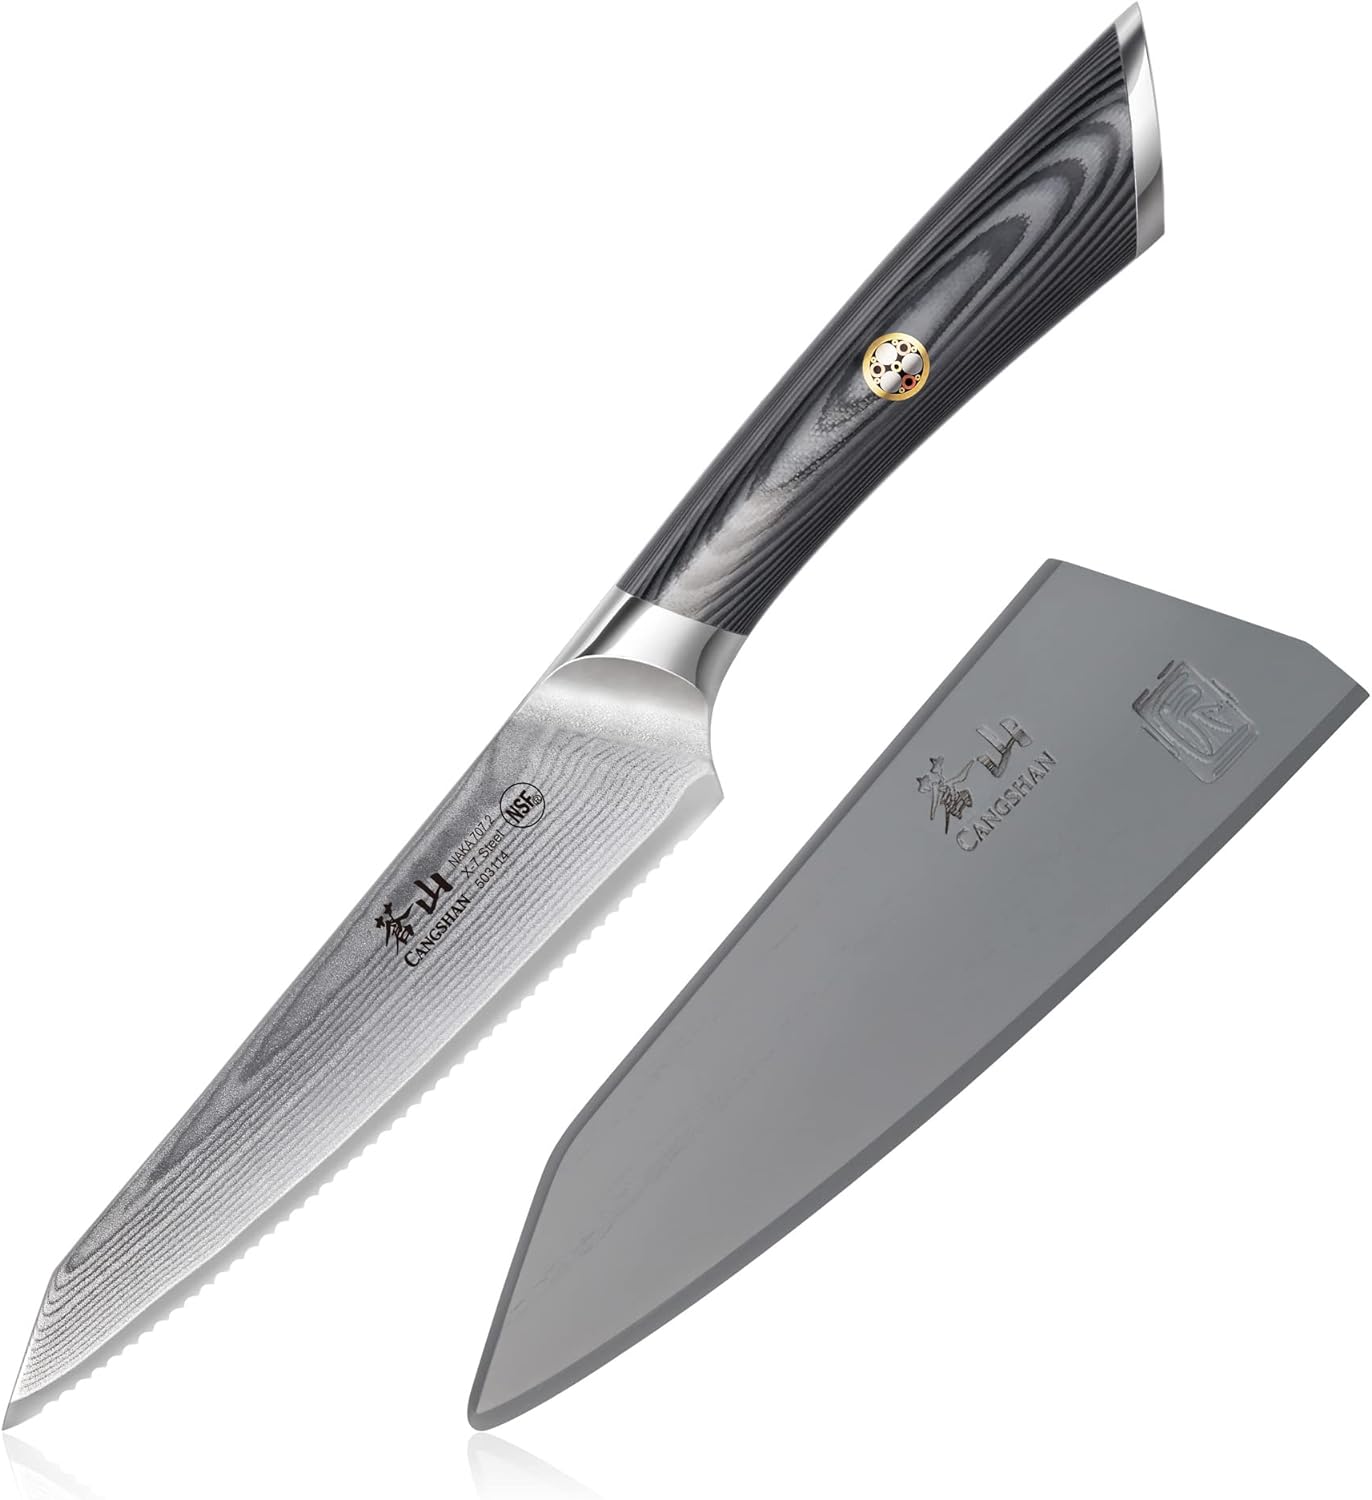 Cangshan NAKA Series 503114 X-7 Steel Forged 6-inch Serrated Utility Knife with Sheath